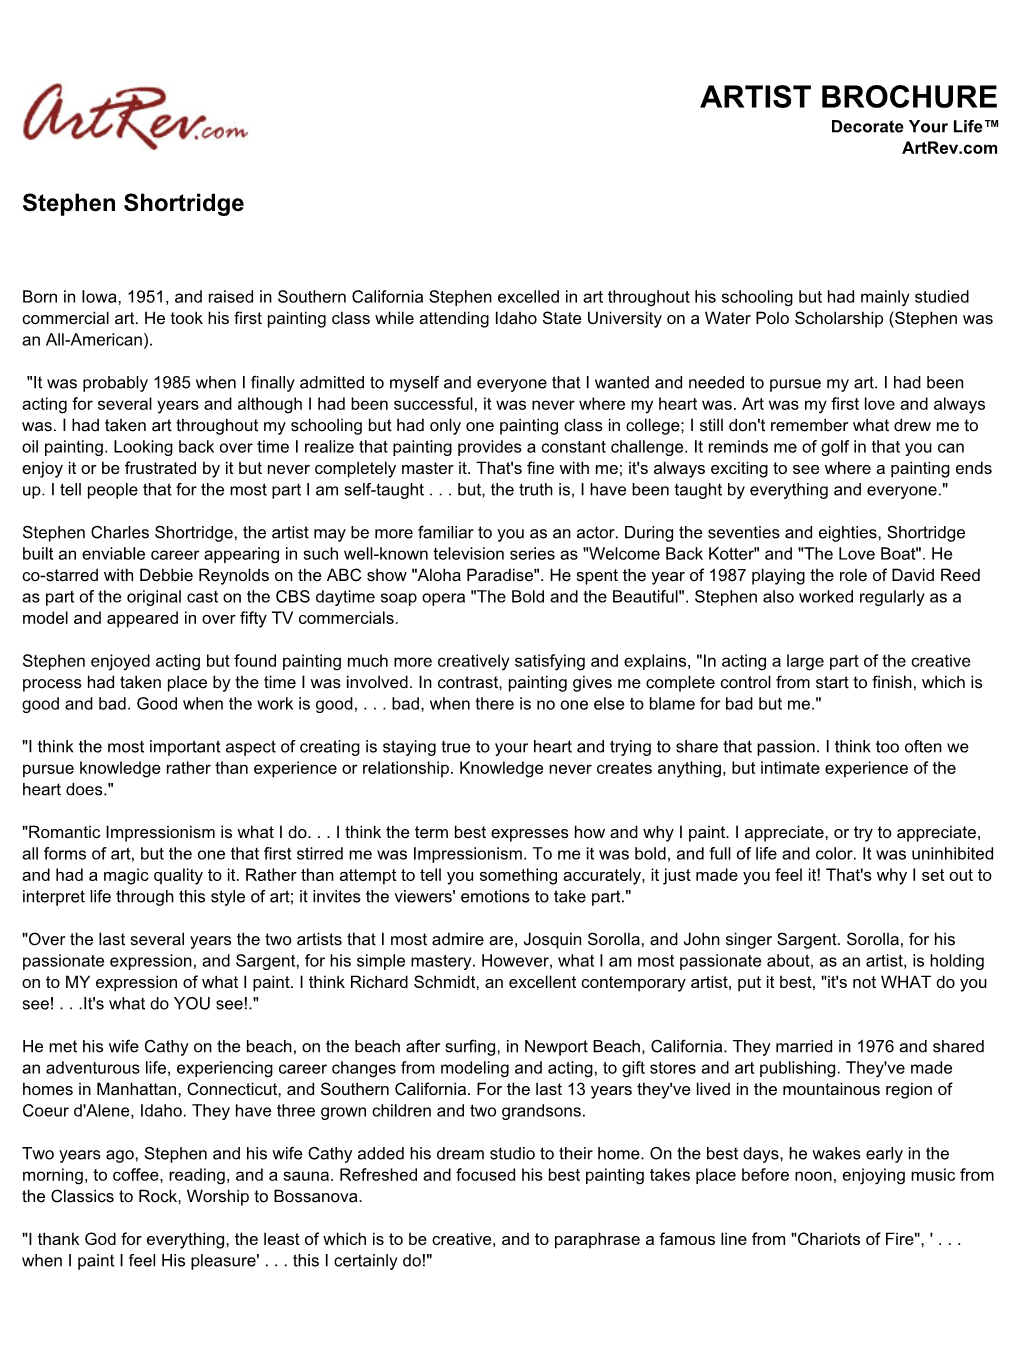 Stephen Shortridge Biography